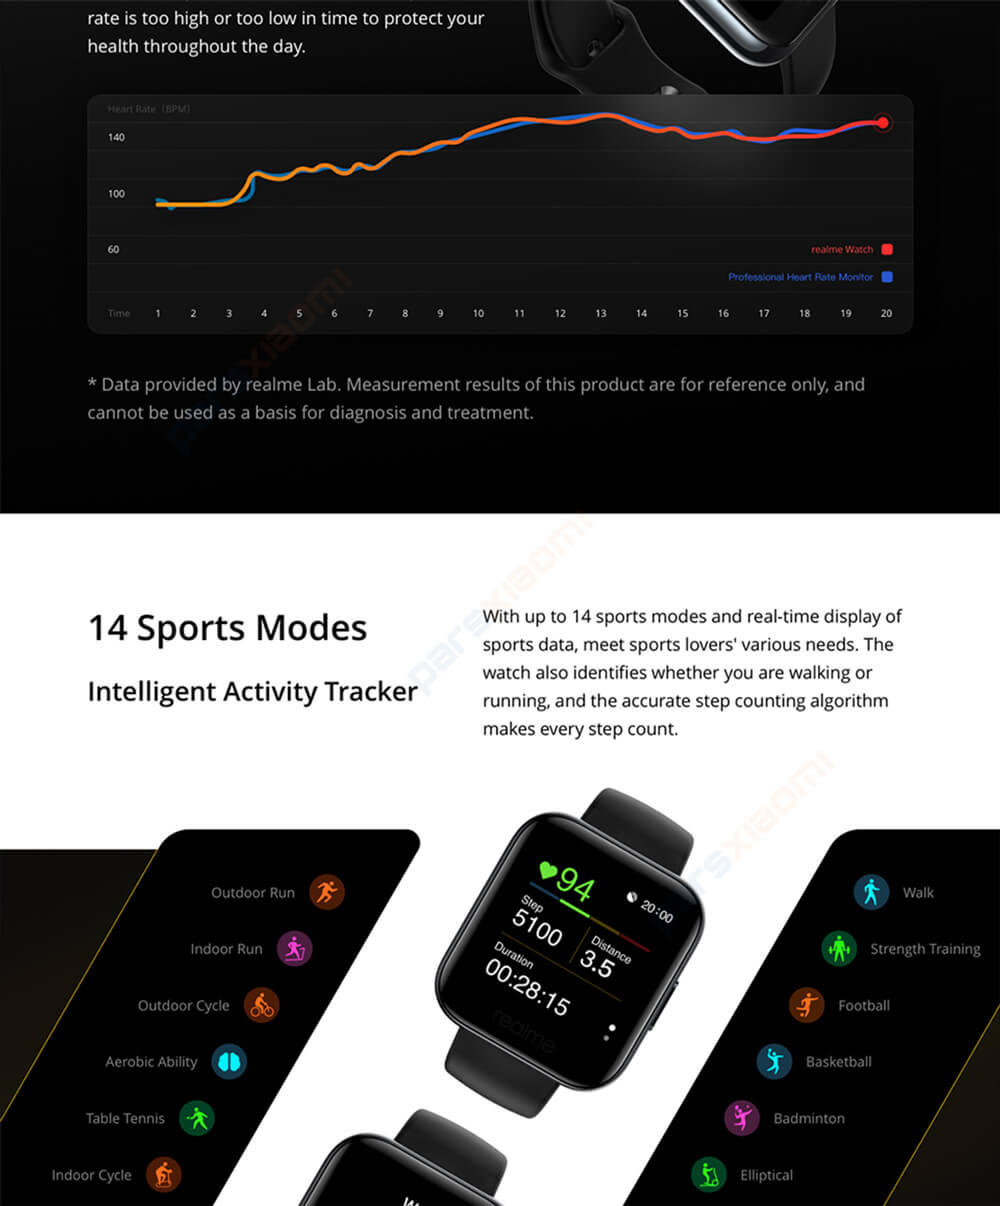 ساعت هوشمند ریلمی Realme Watch RMA161 Smart Watch نسخه گلوبال